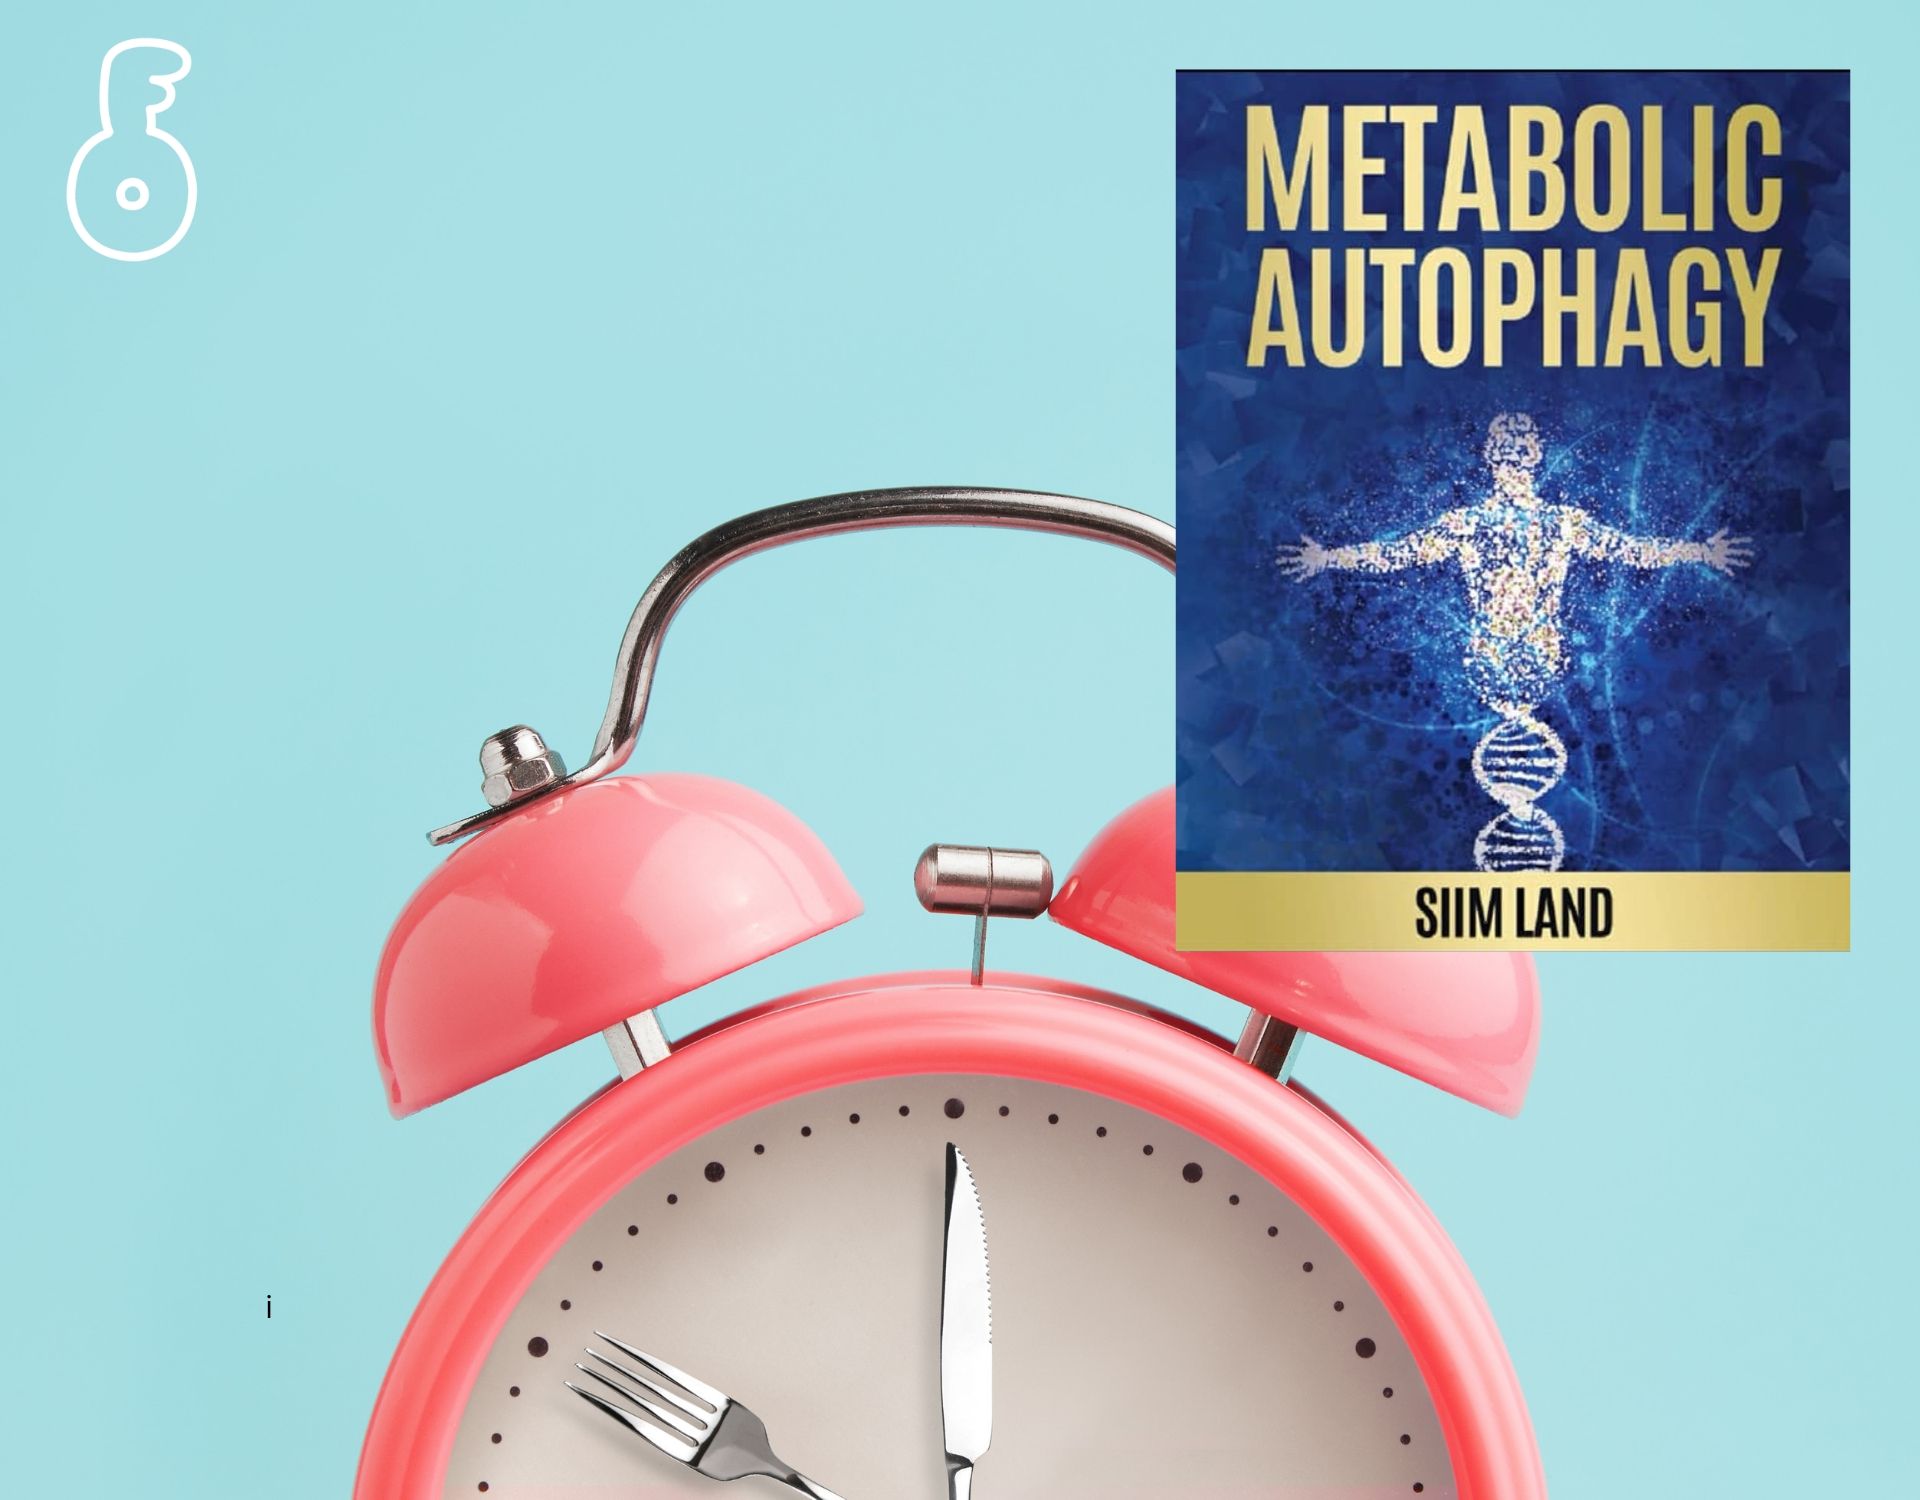 metabolic autophagy and slim land